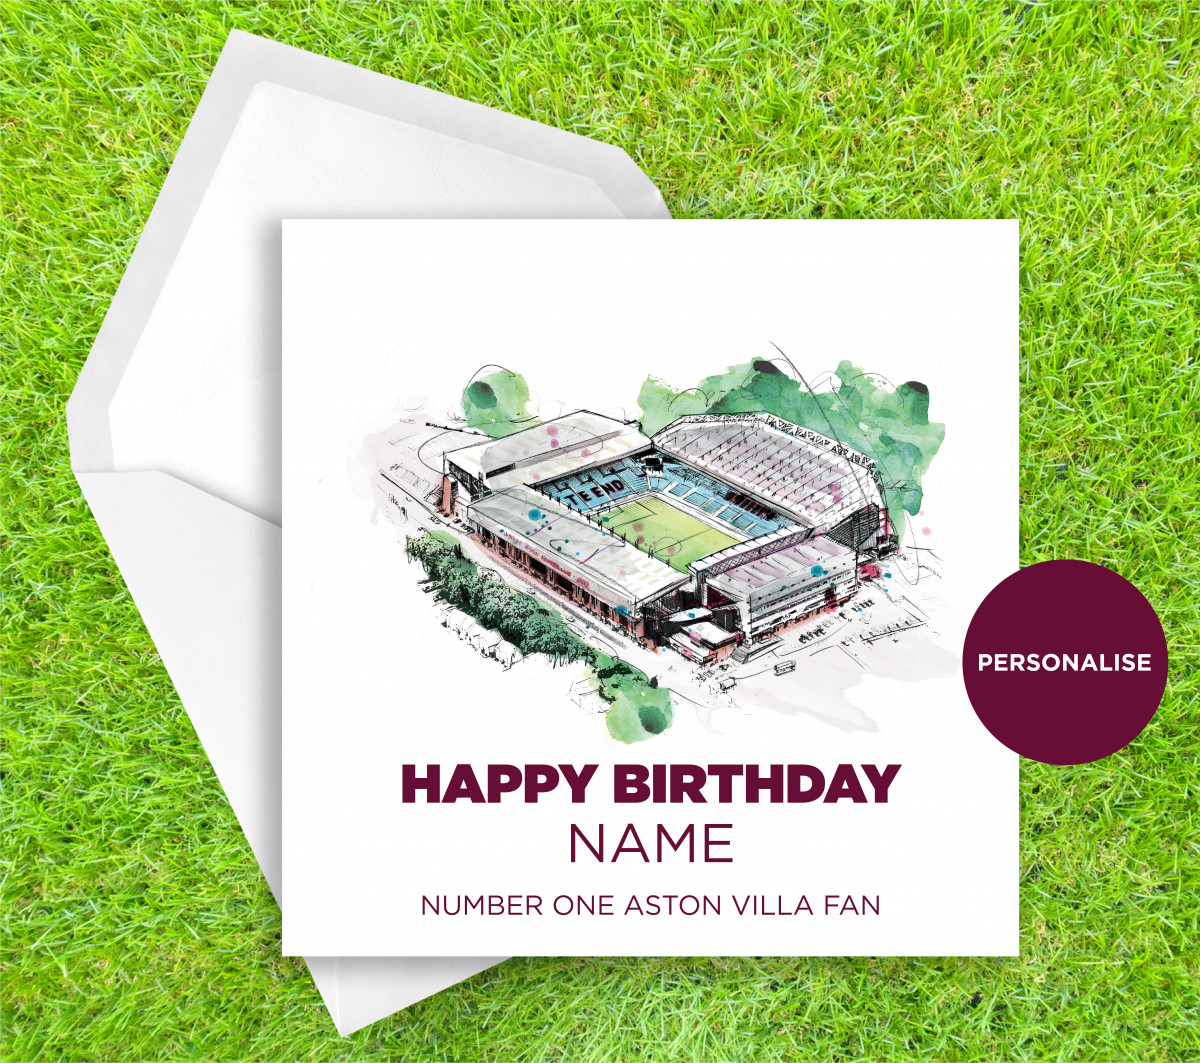 Aston Villa, Villa Park, personalised birthday card